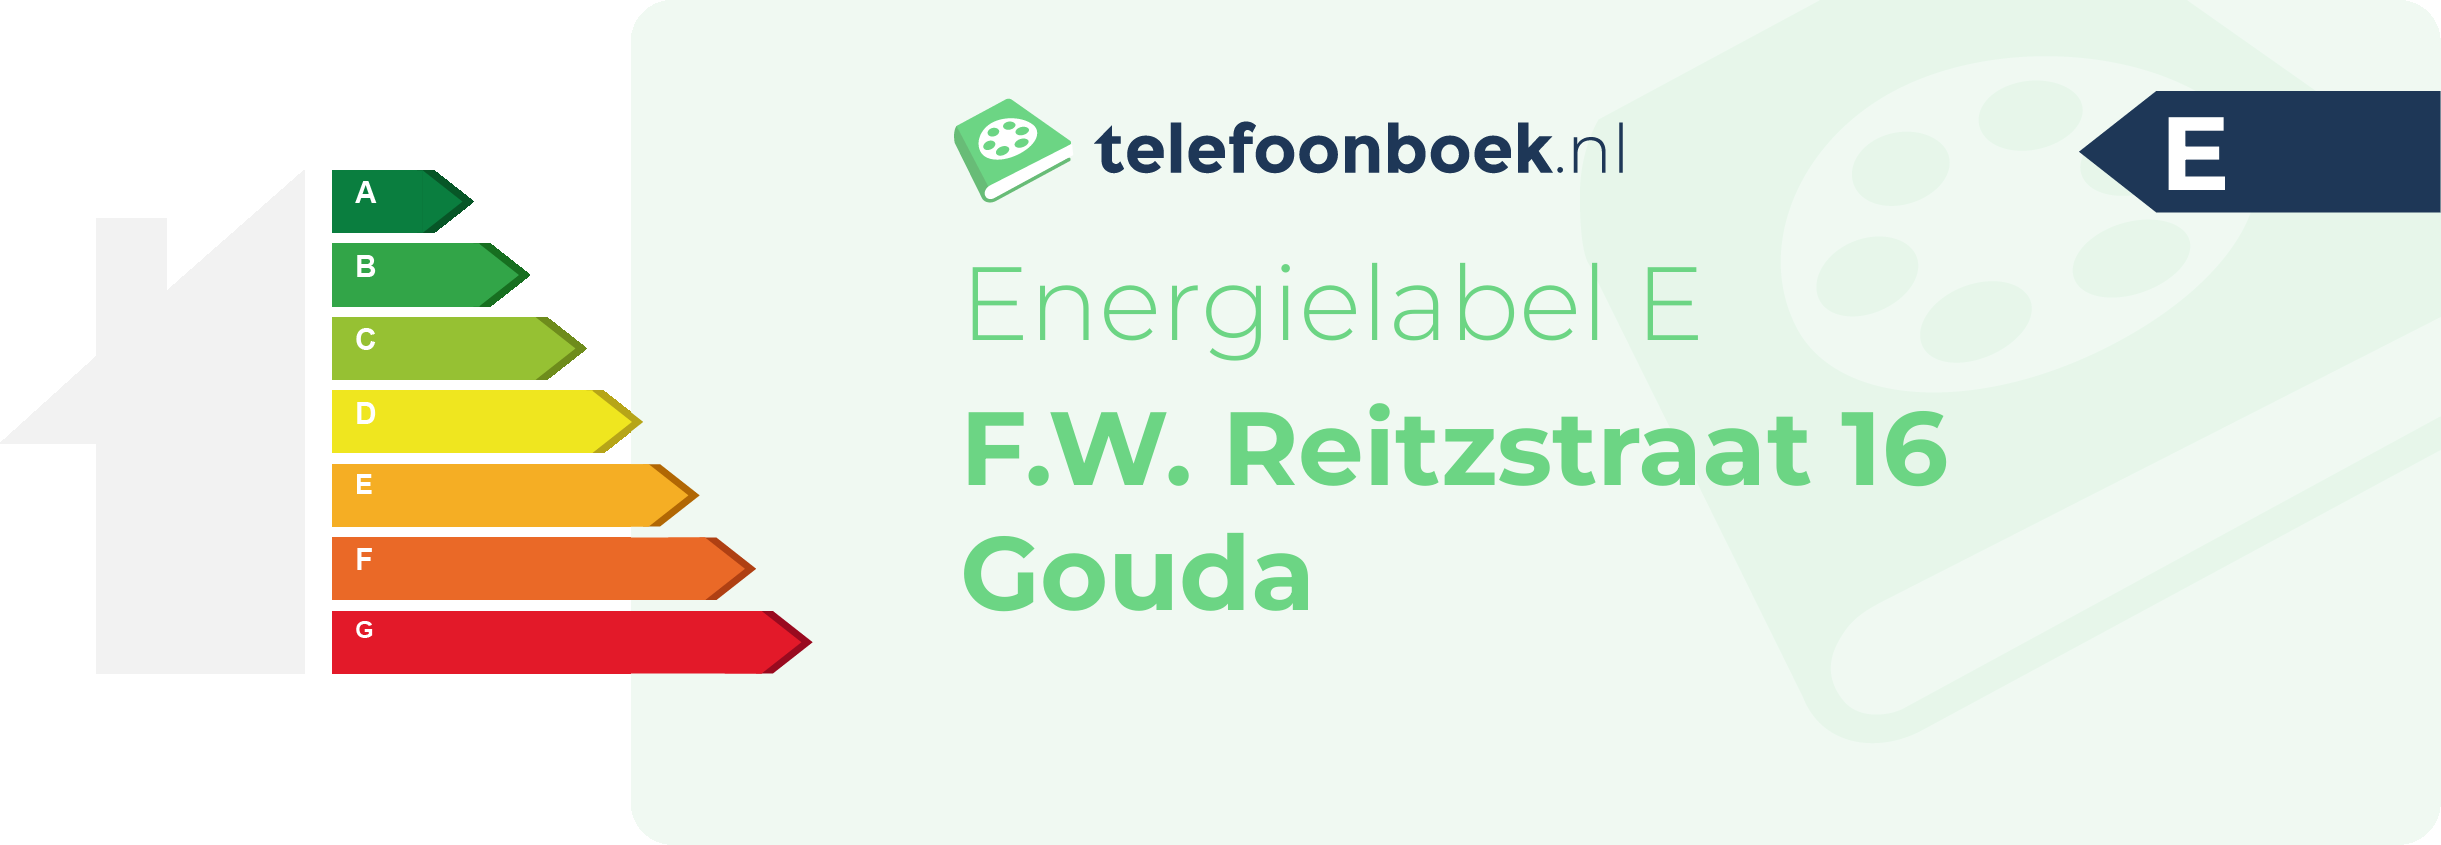 Energielabel F.W. Reitzstraat 16 Gouda